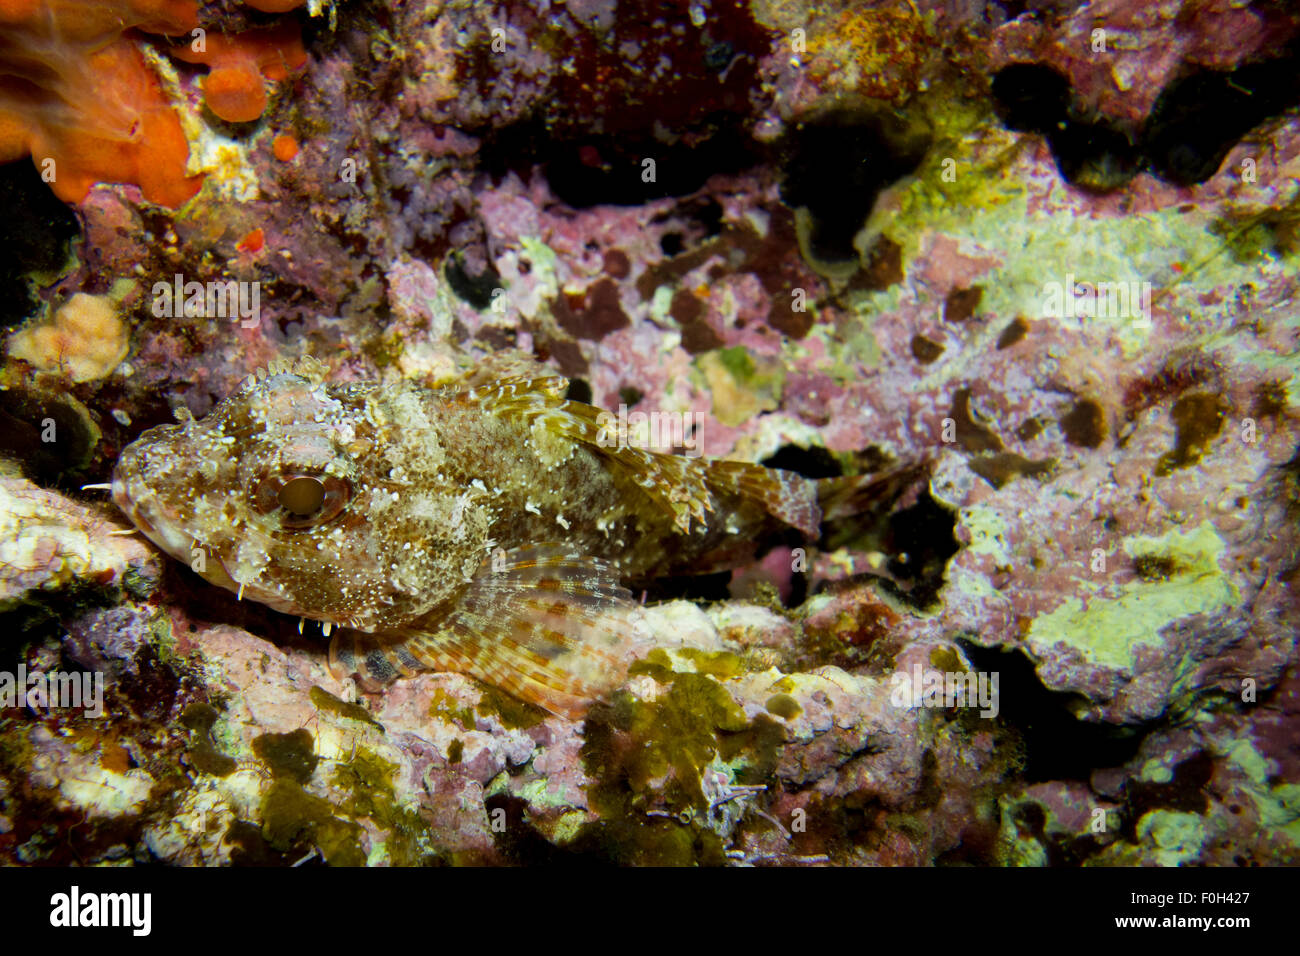 Dwarf Rockfish, Scorpaena notate, on algae covered rock in the Mediterranean Sea, Malta. Stock Photo